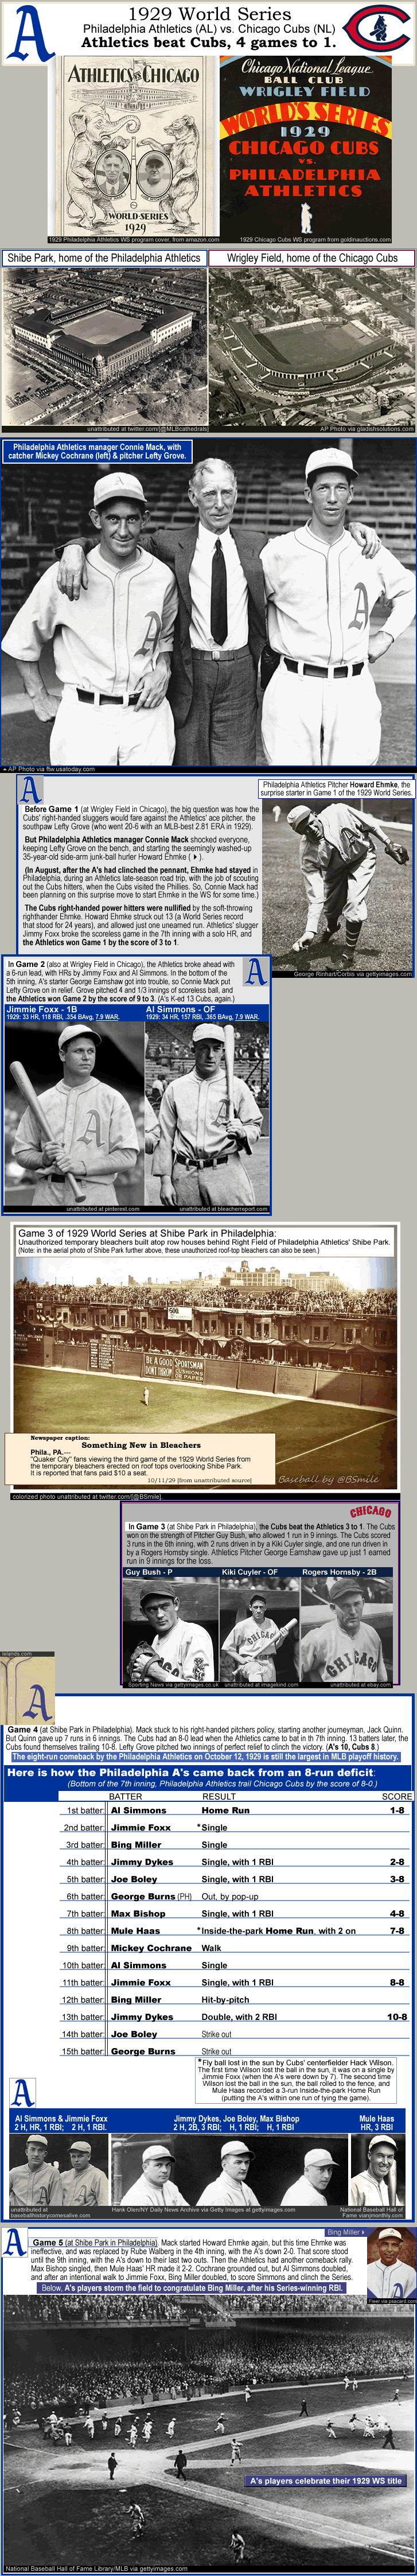 philadelphia-athletics_1929_worldseries-champions_athletics-4-games_cubs-1_wrigley-field_shibe-park_athletics-have-greatest-comeback-in-mlb-postseason-history_h_.gif